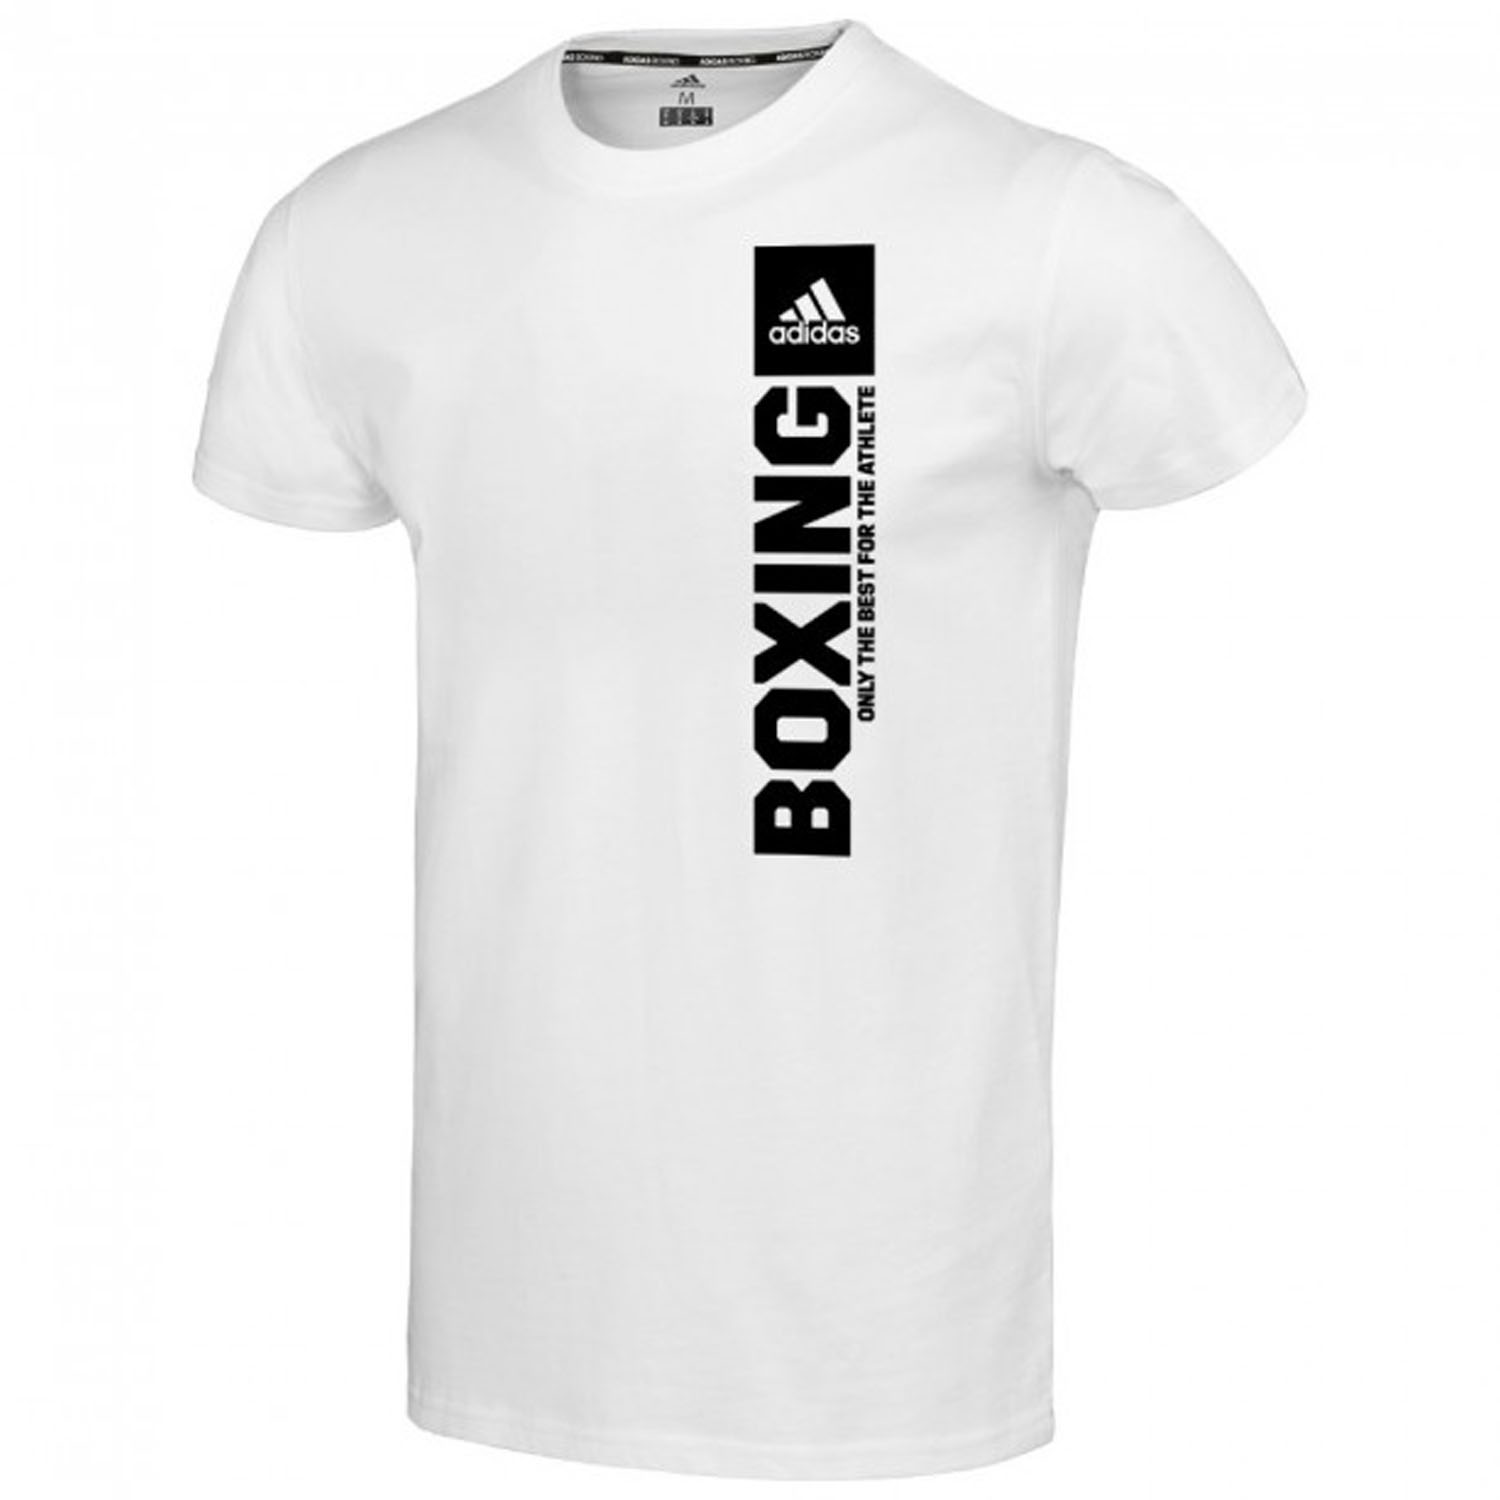 adidas T-Shirt, Community Vertical Boxing, weiß, M